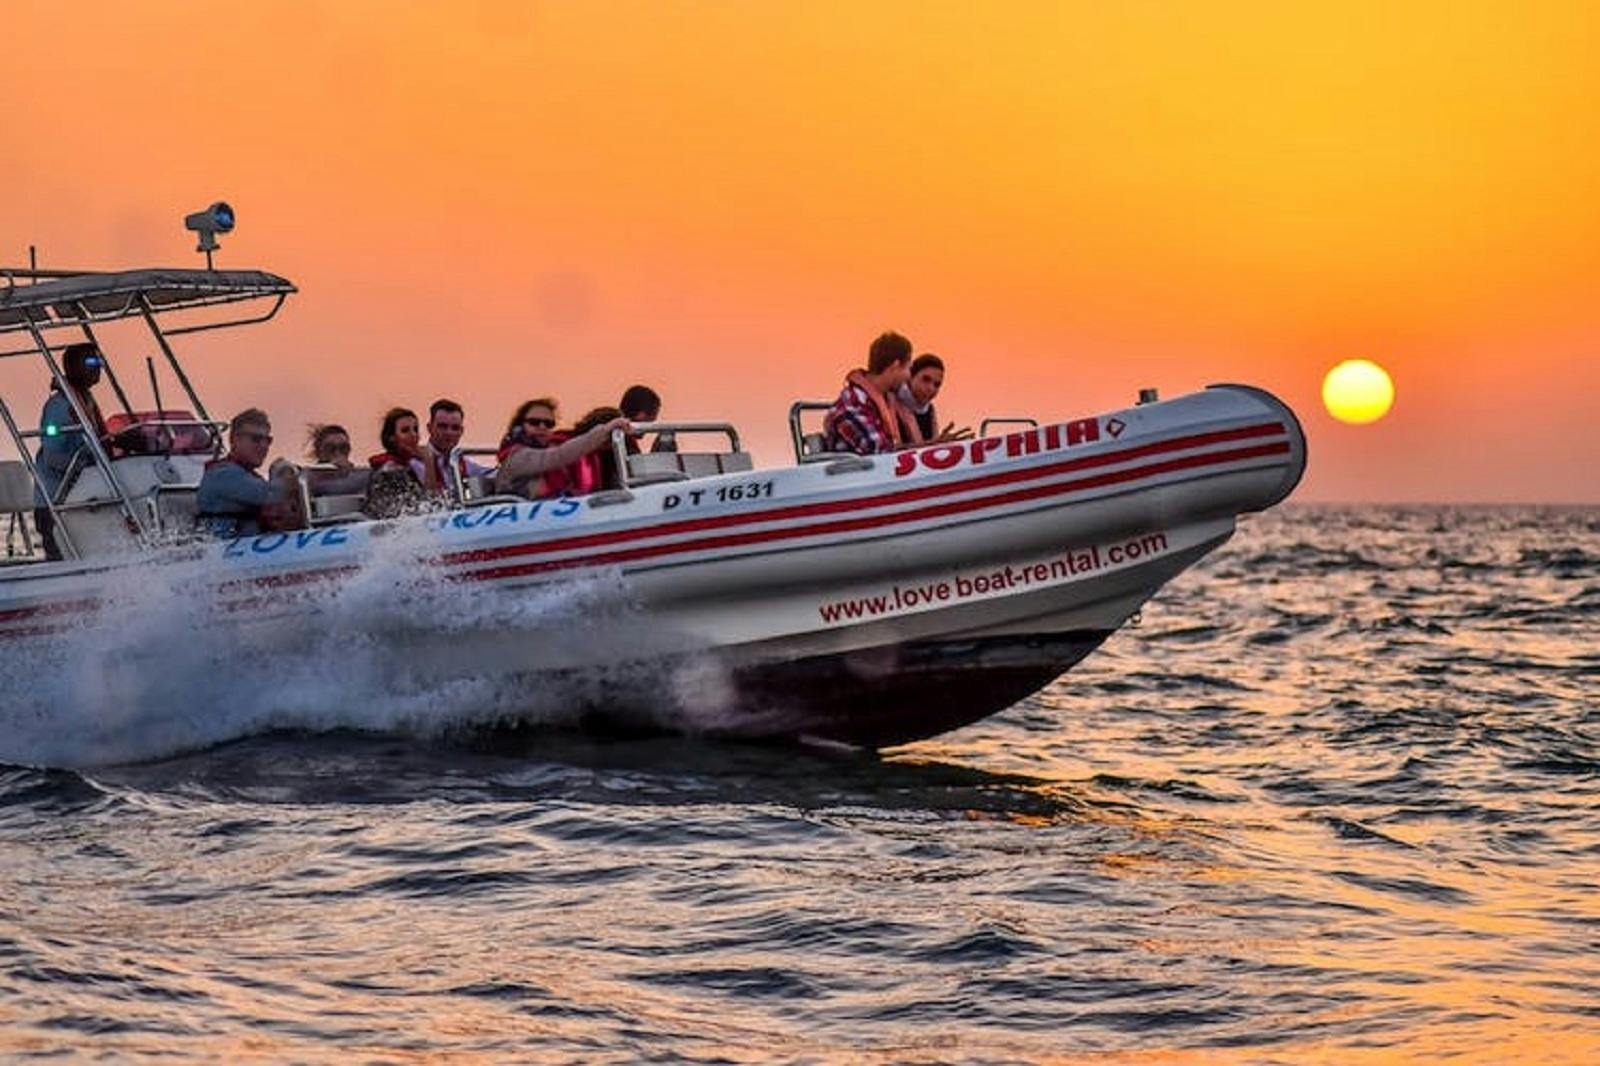 60-minütige Bootstour in der Dubai Marina